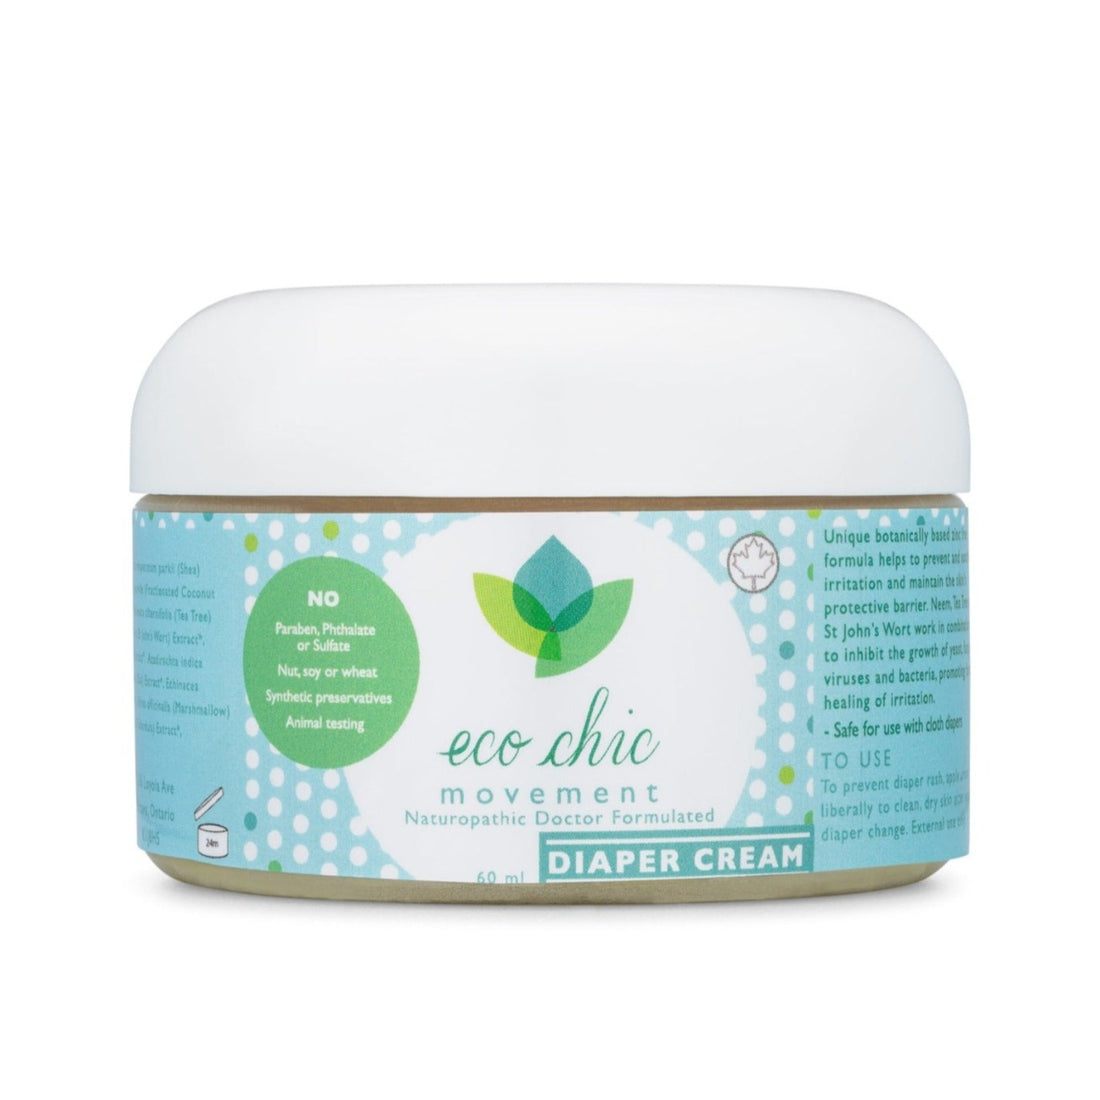 A tub of handmade zinc-free, natural diaper rash cream that is also cloth diaper diaper cream for irritation